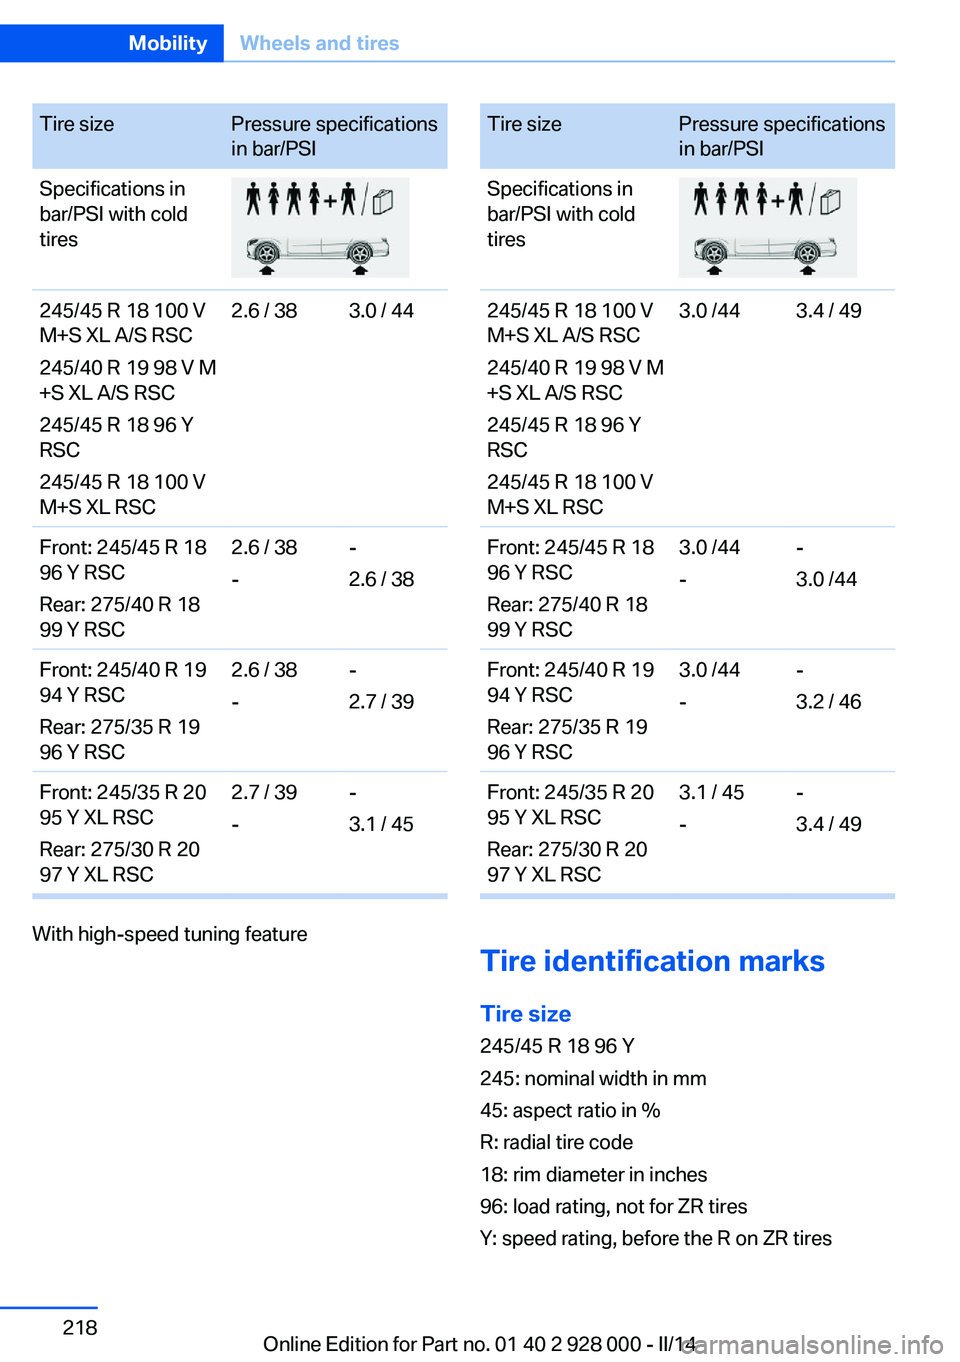 BMW 528I XDRIVE 2014  Owners Manual Tire sizePressure specifications
in bar/PSI
Specifications in
bar/PSI with cold
tires
245/45 R 18 100 V
M+S XL A/S RSC
245/40 R 19 98 V M
+S XL A/S RSC
245/45 R 18 96 Y
RSC
245/45 R 18 100 V
M+S XL RS